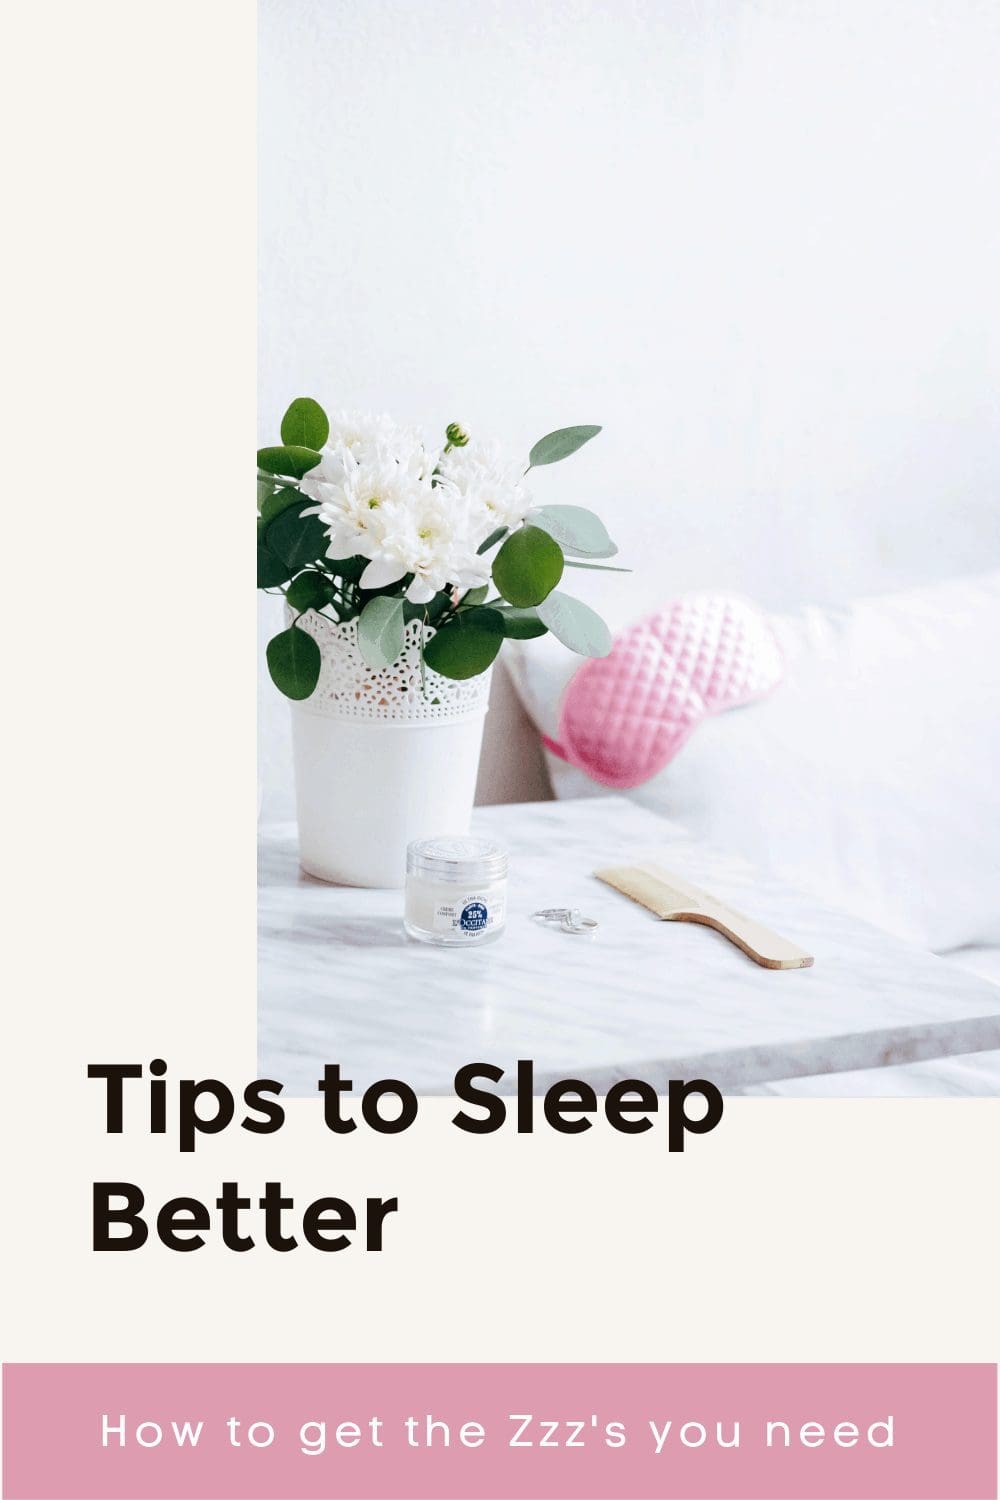 Tips to Sleep Better